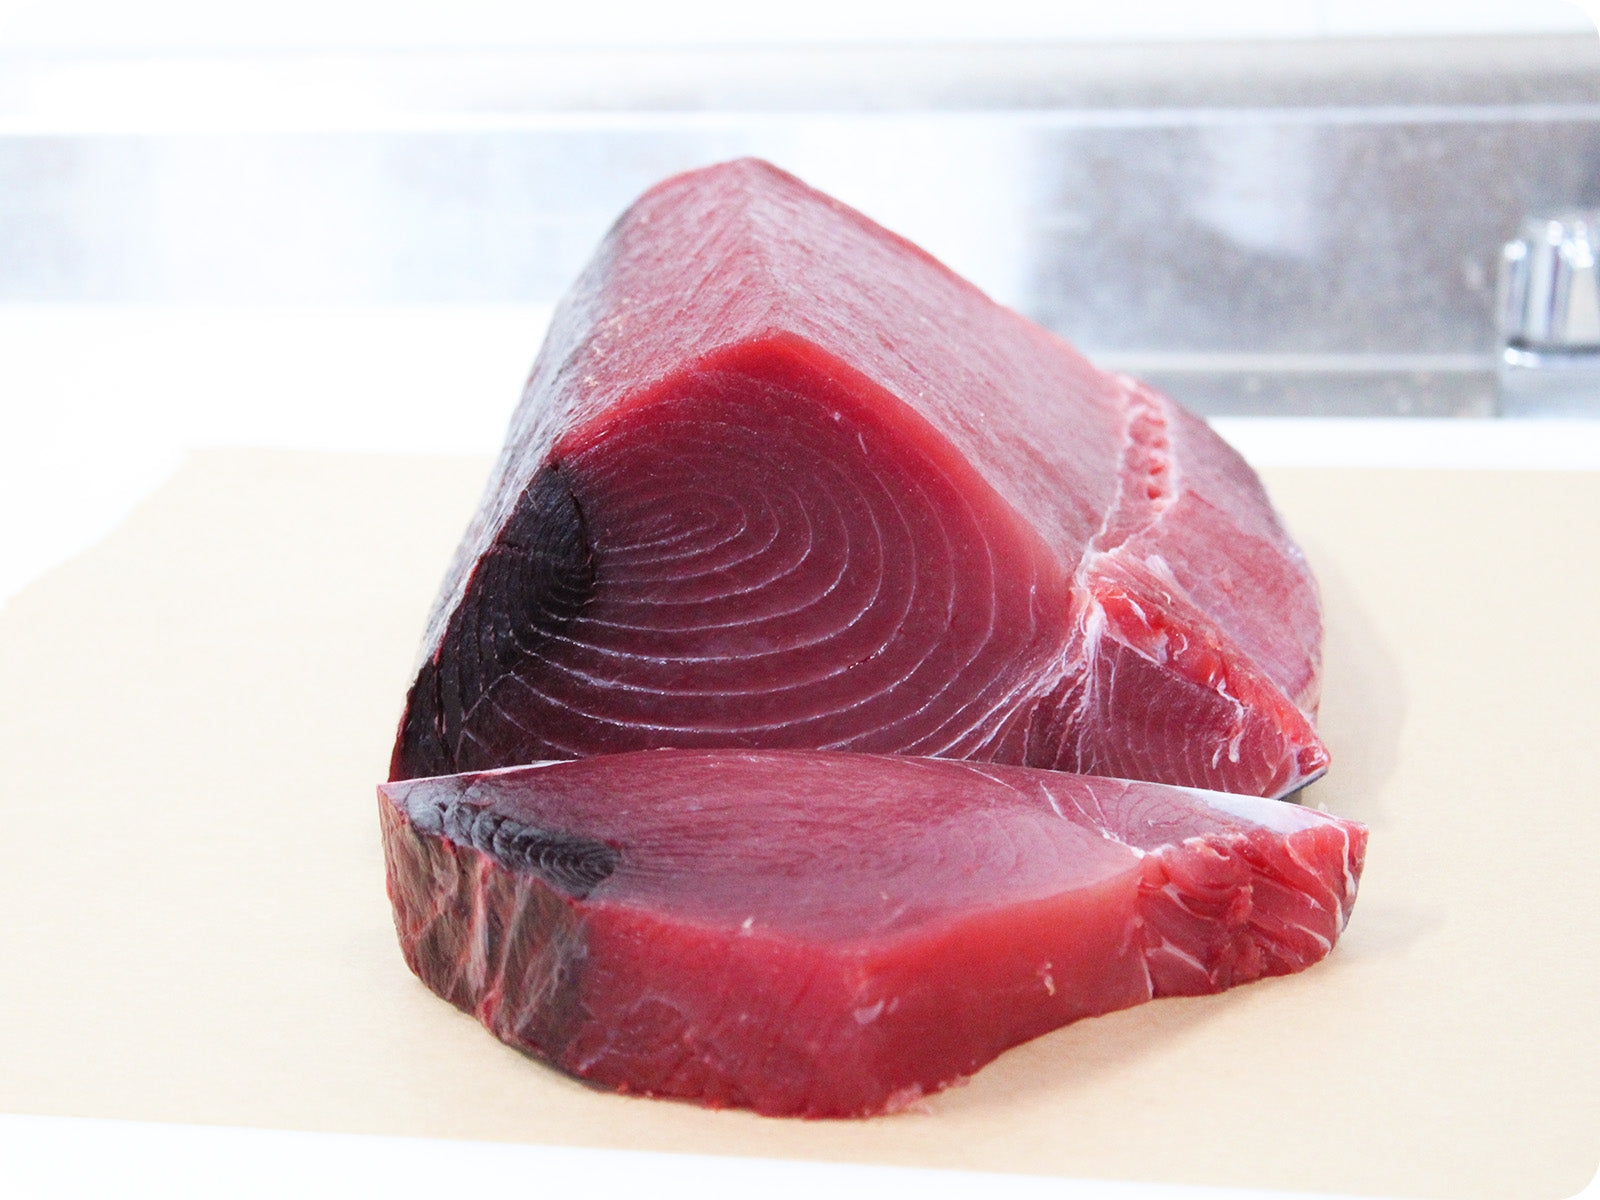 Yellowfin Tuna “Ahi Tuna” (fresh, wild) by the pound - Overnight